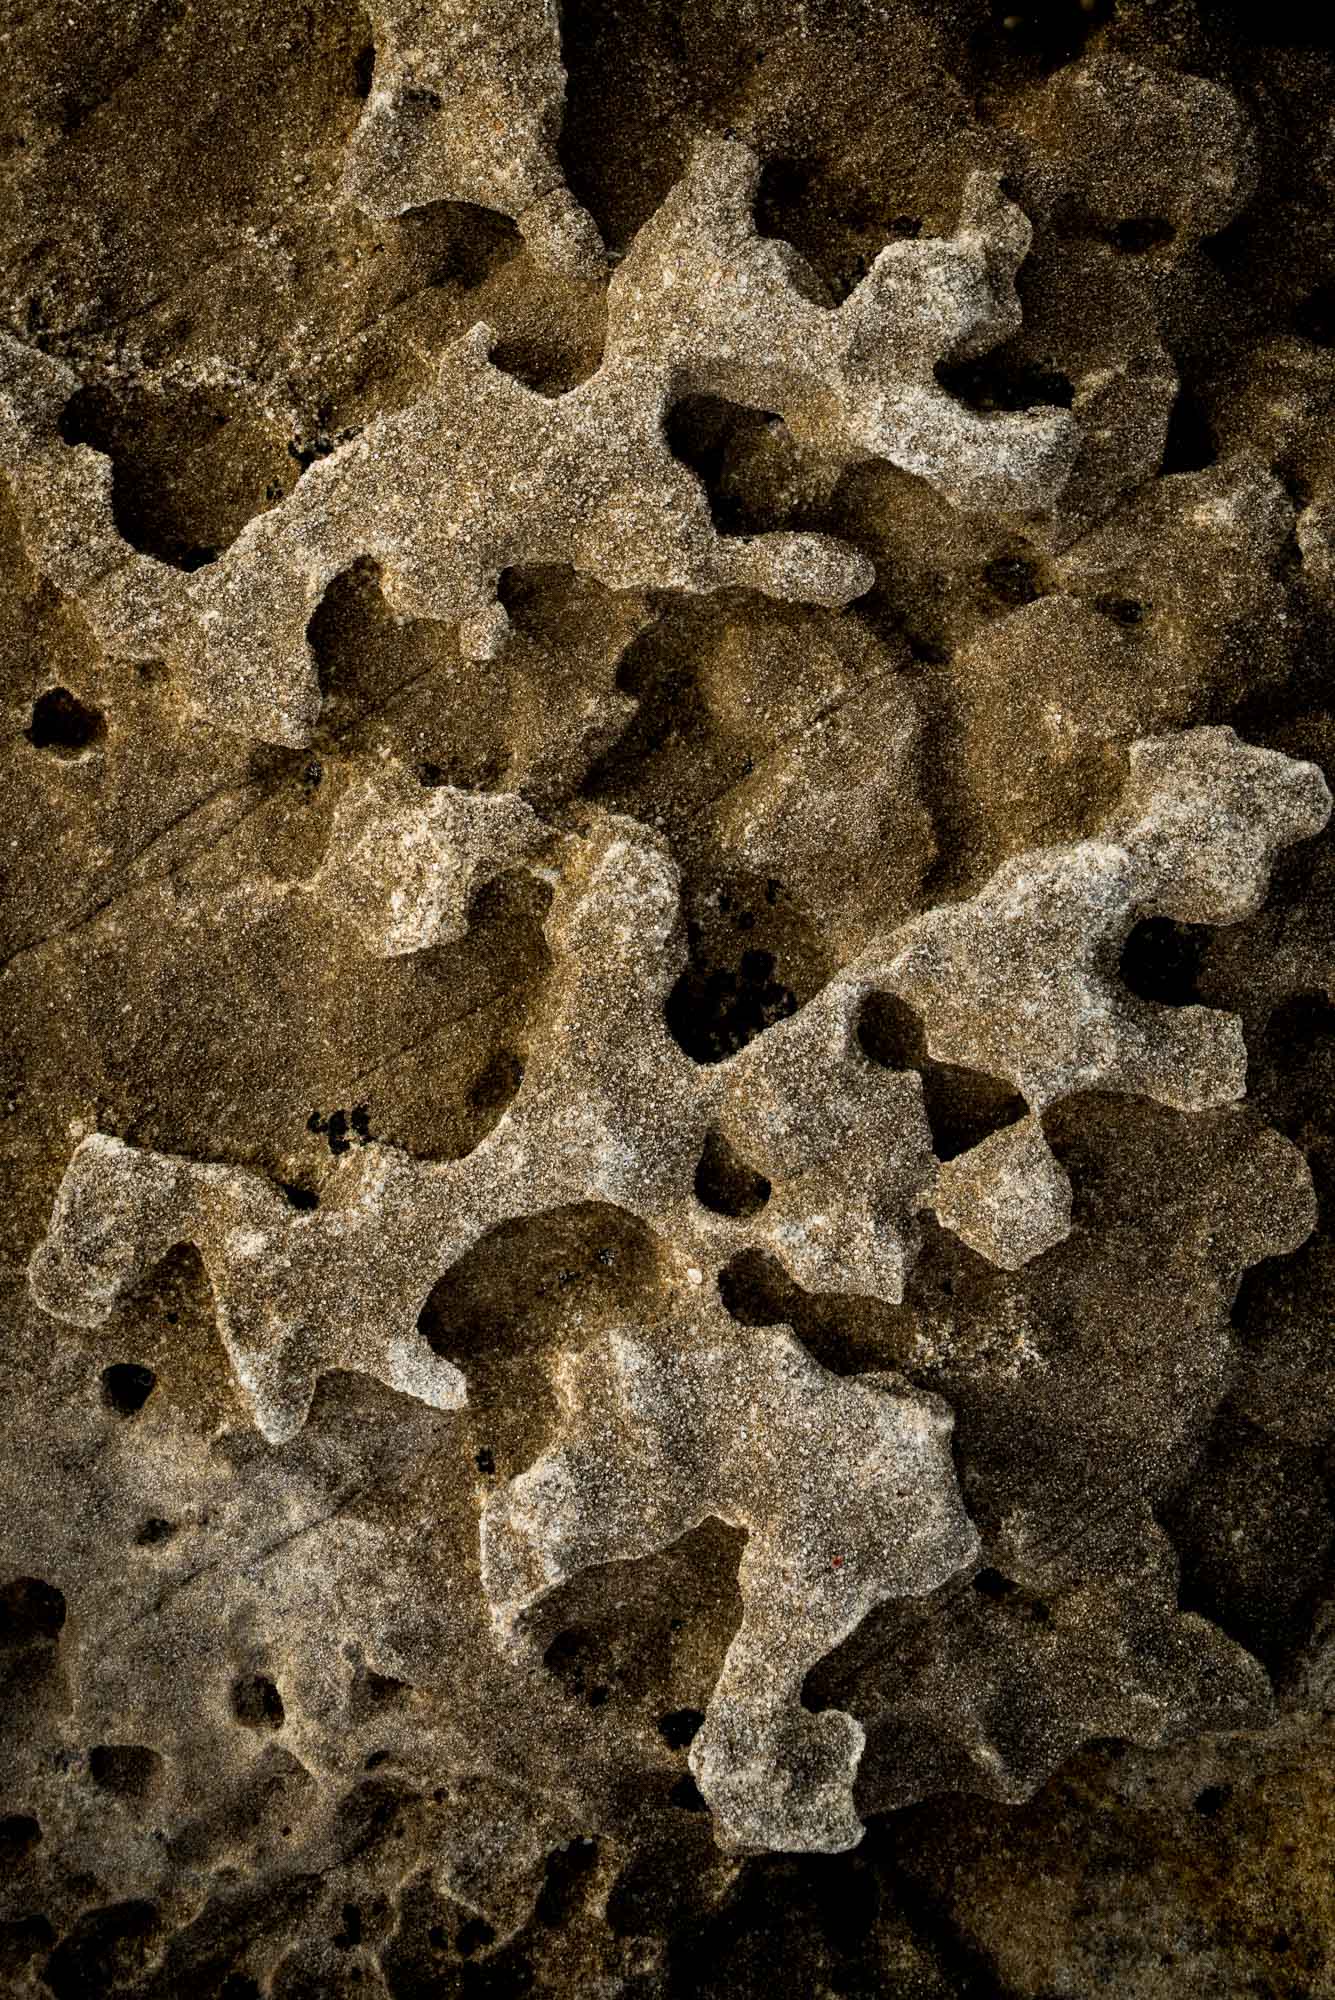 Wriggly sandstone rock texture